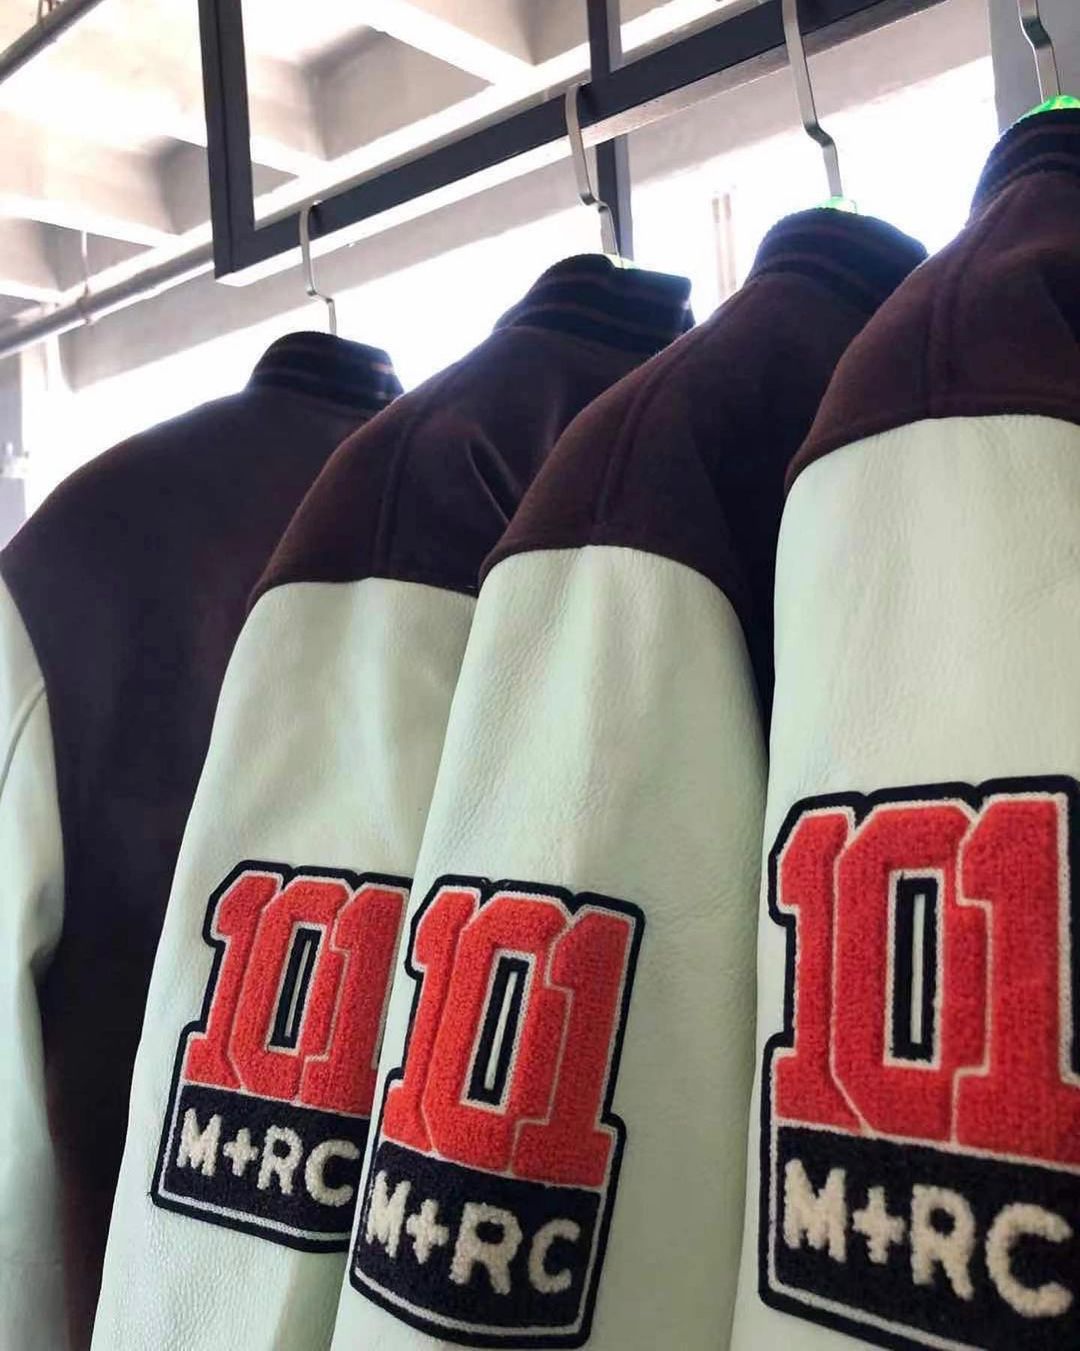 M+RC NOIR オンラインにて”Brown varsity jacket”が11/2 発売 (マルシェノア)